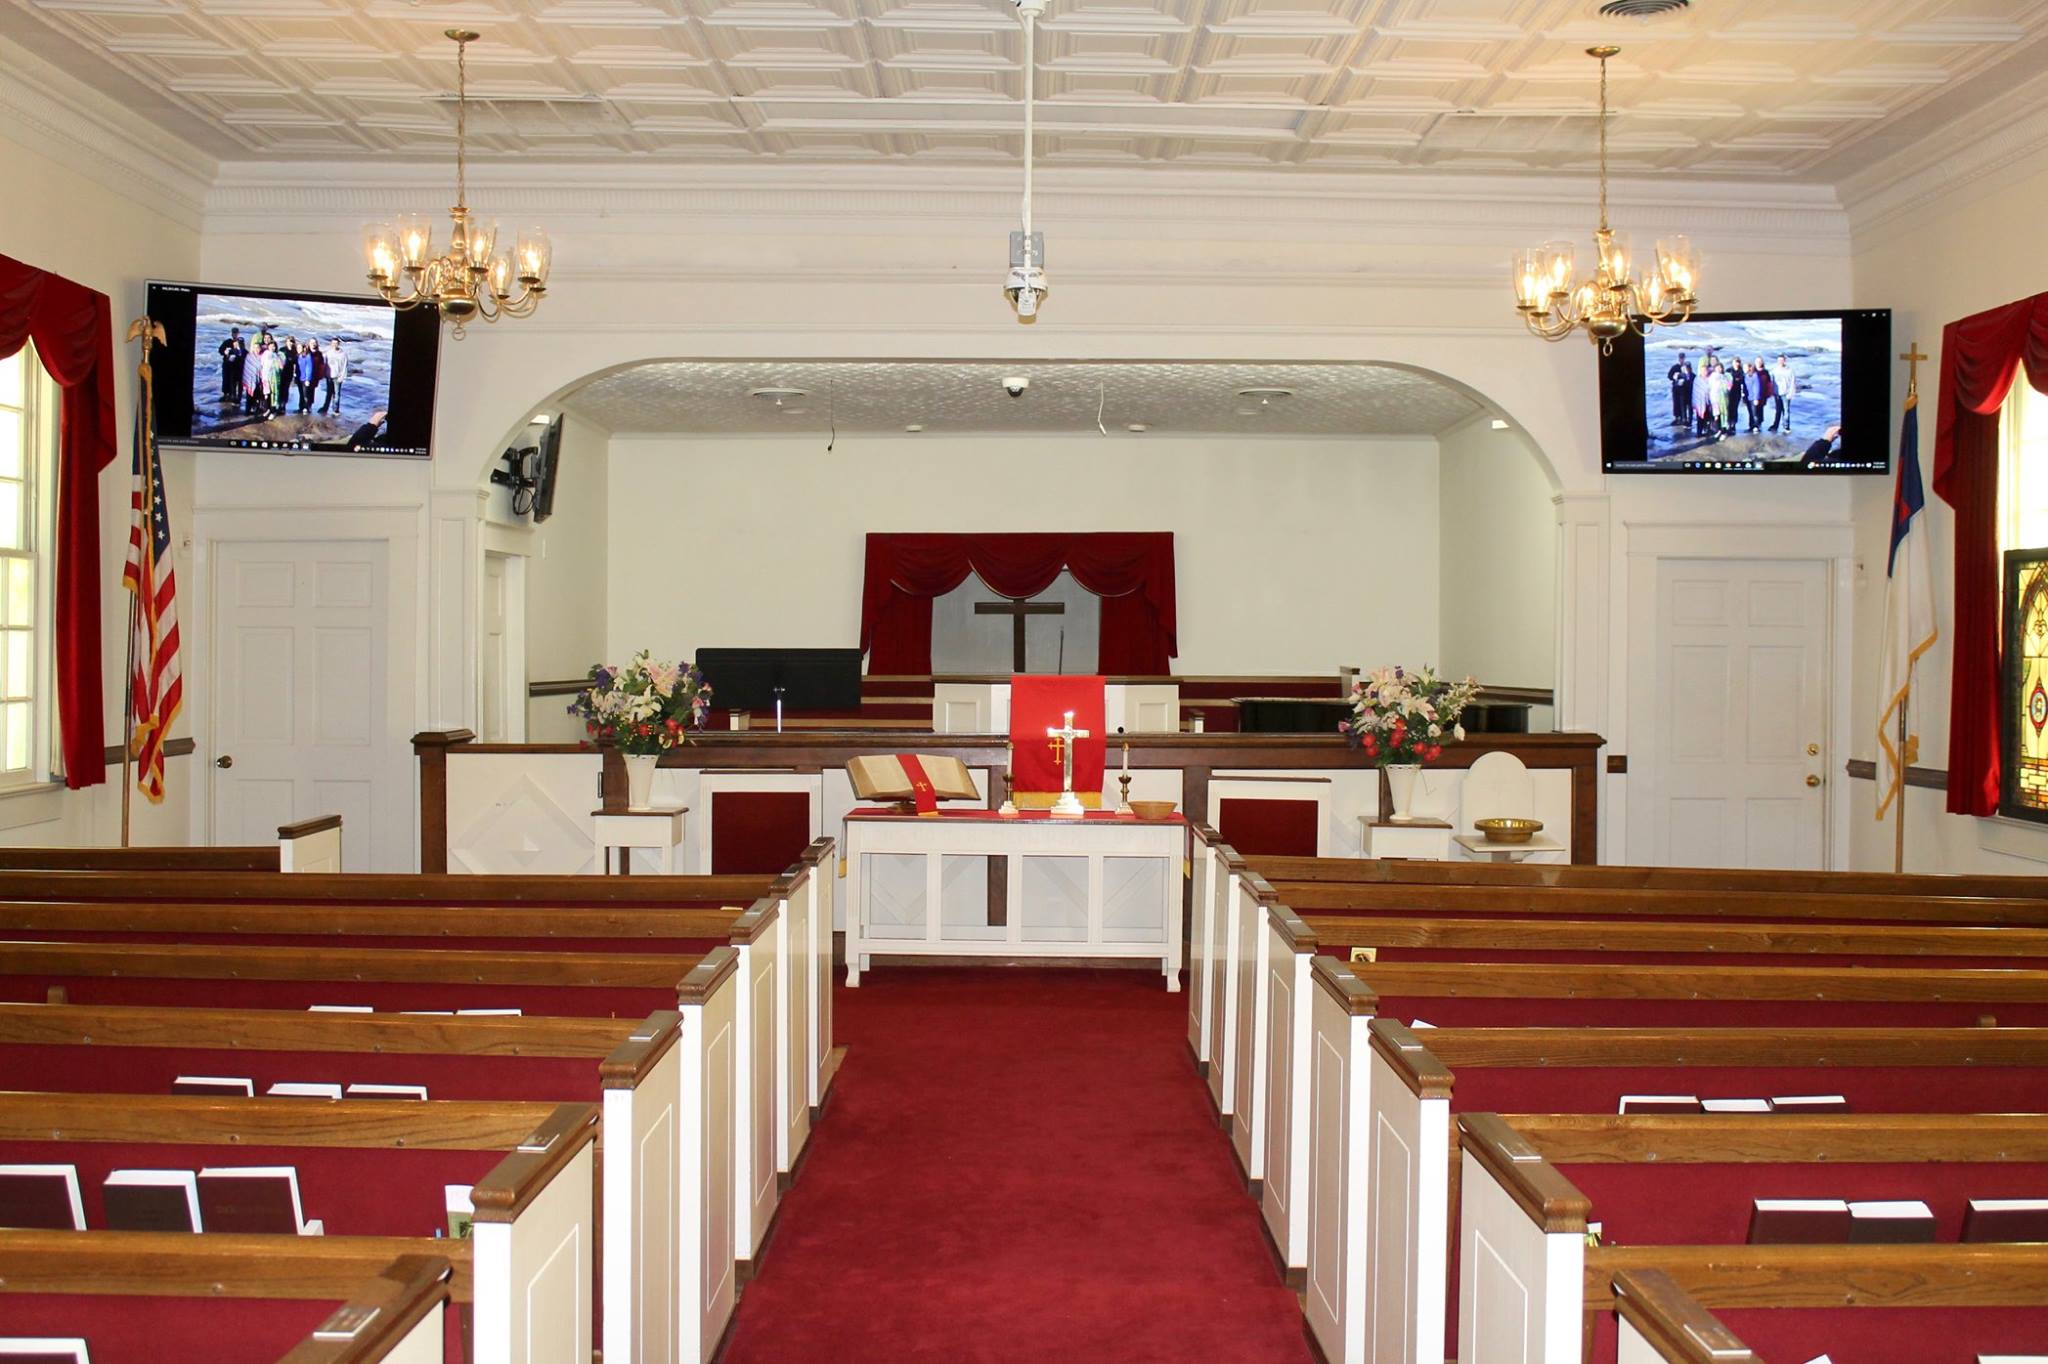 Television Installation in Church